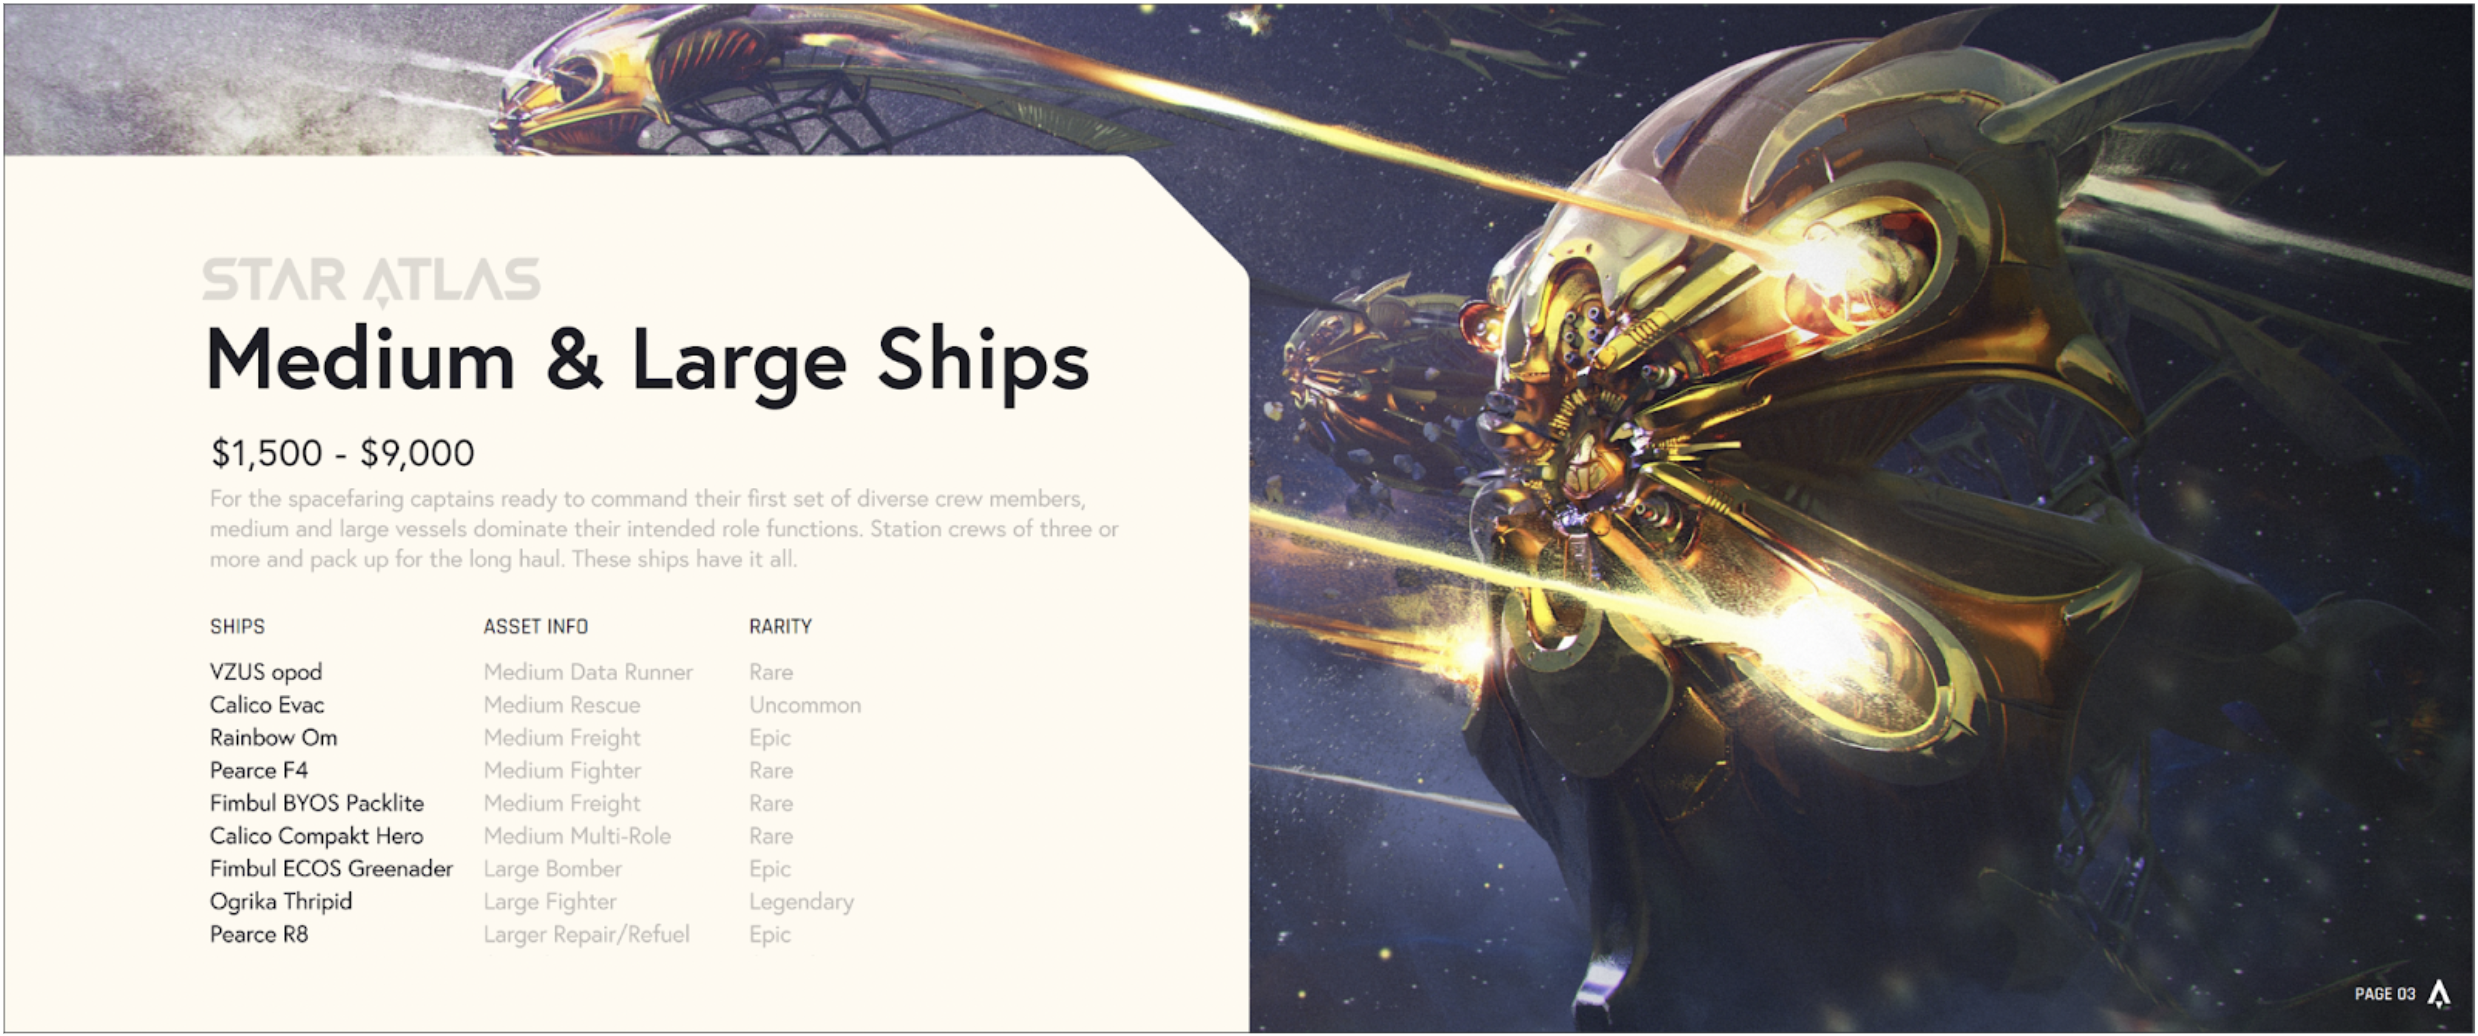 Star Atlas Ship Price According to Their Brochure